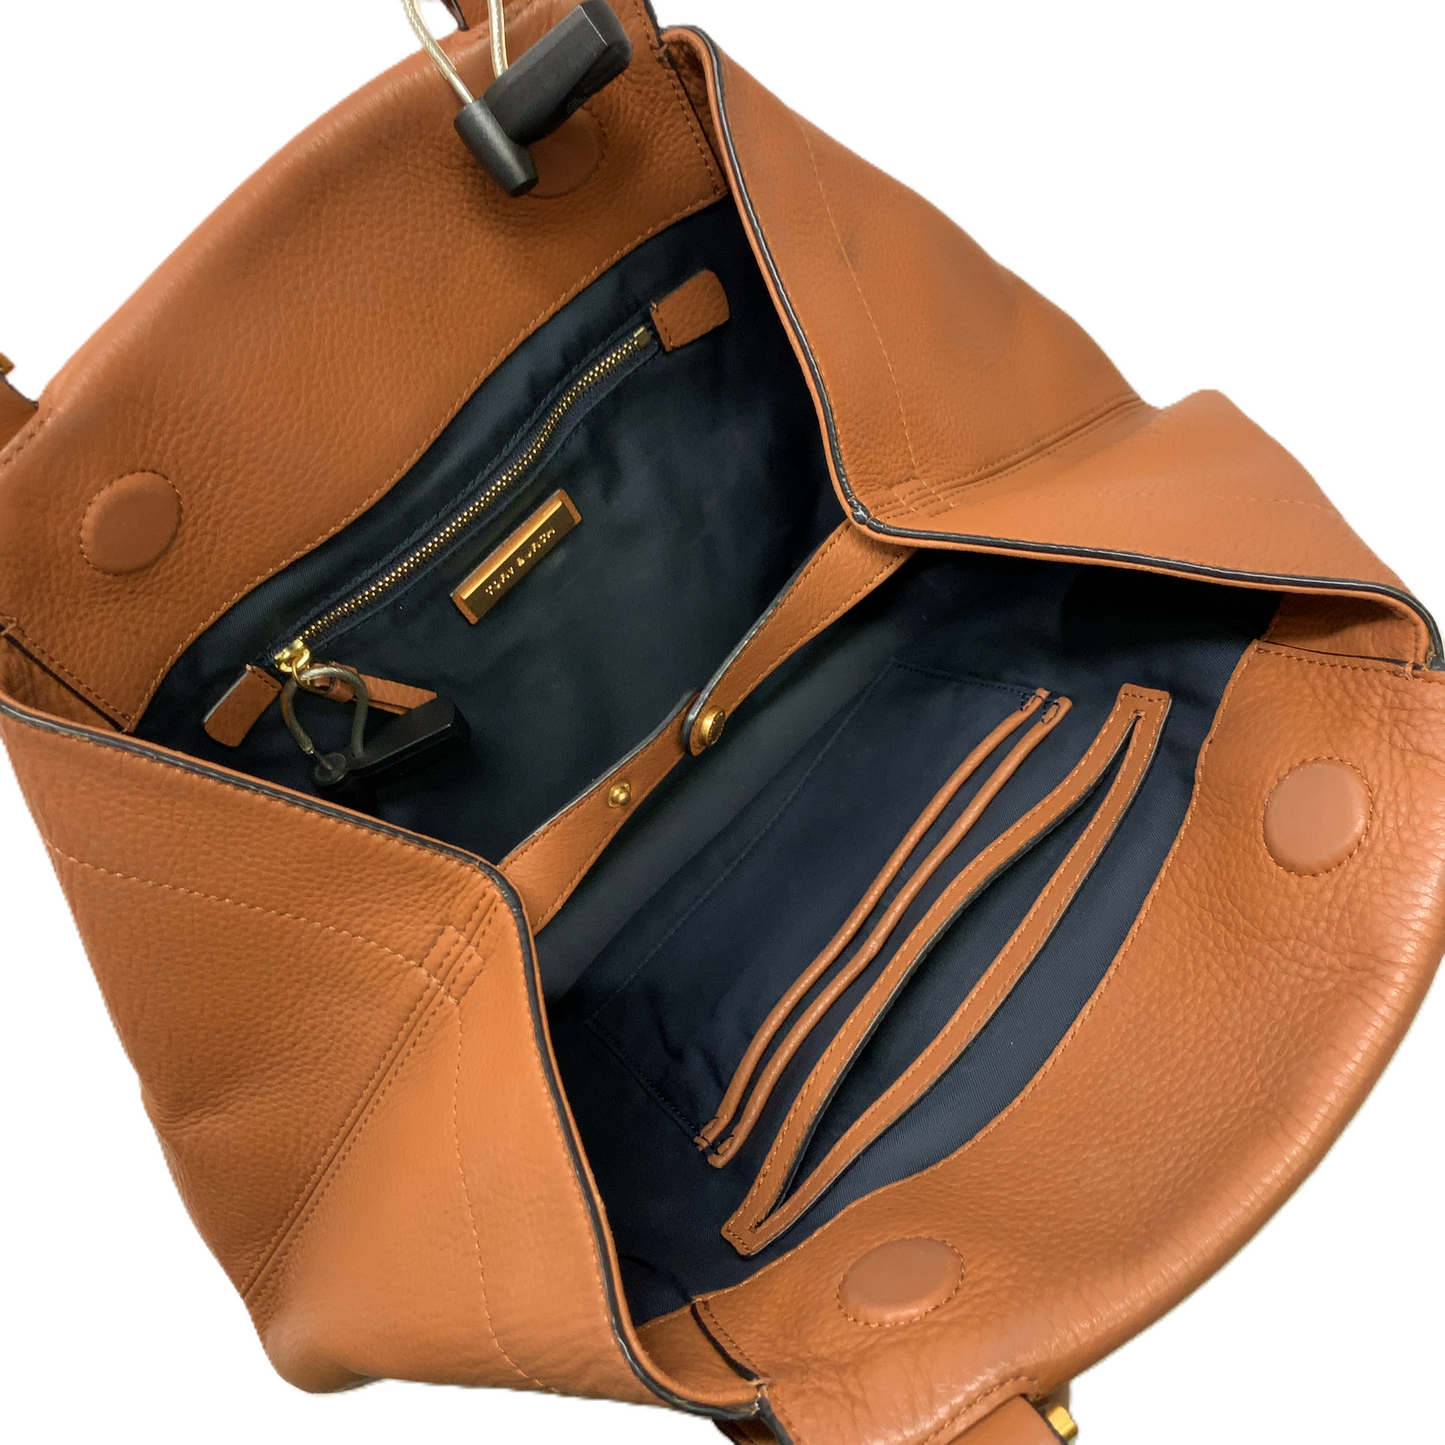 Handbag Designer By Tory Burch  Size: Large